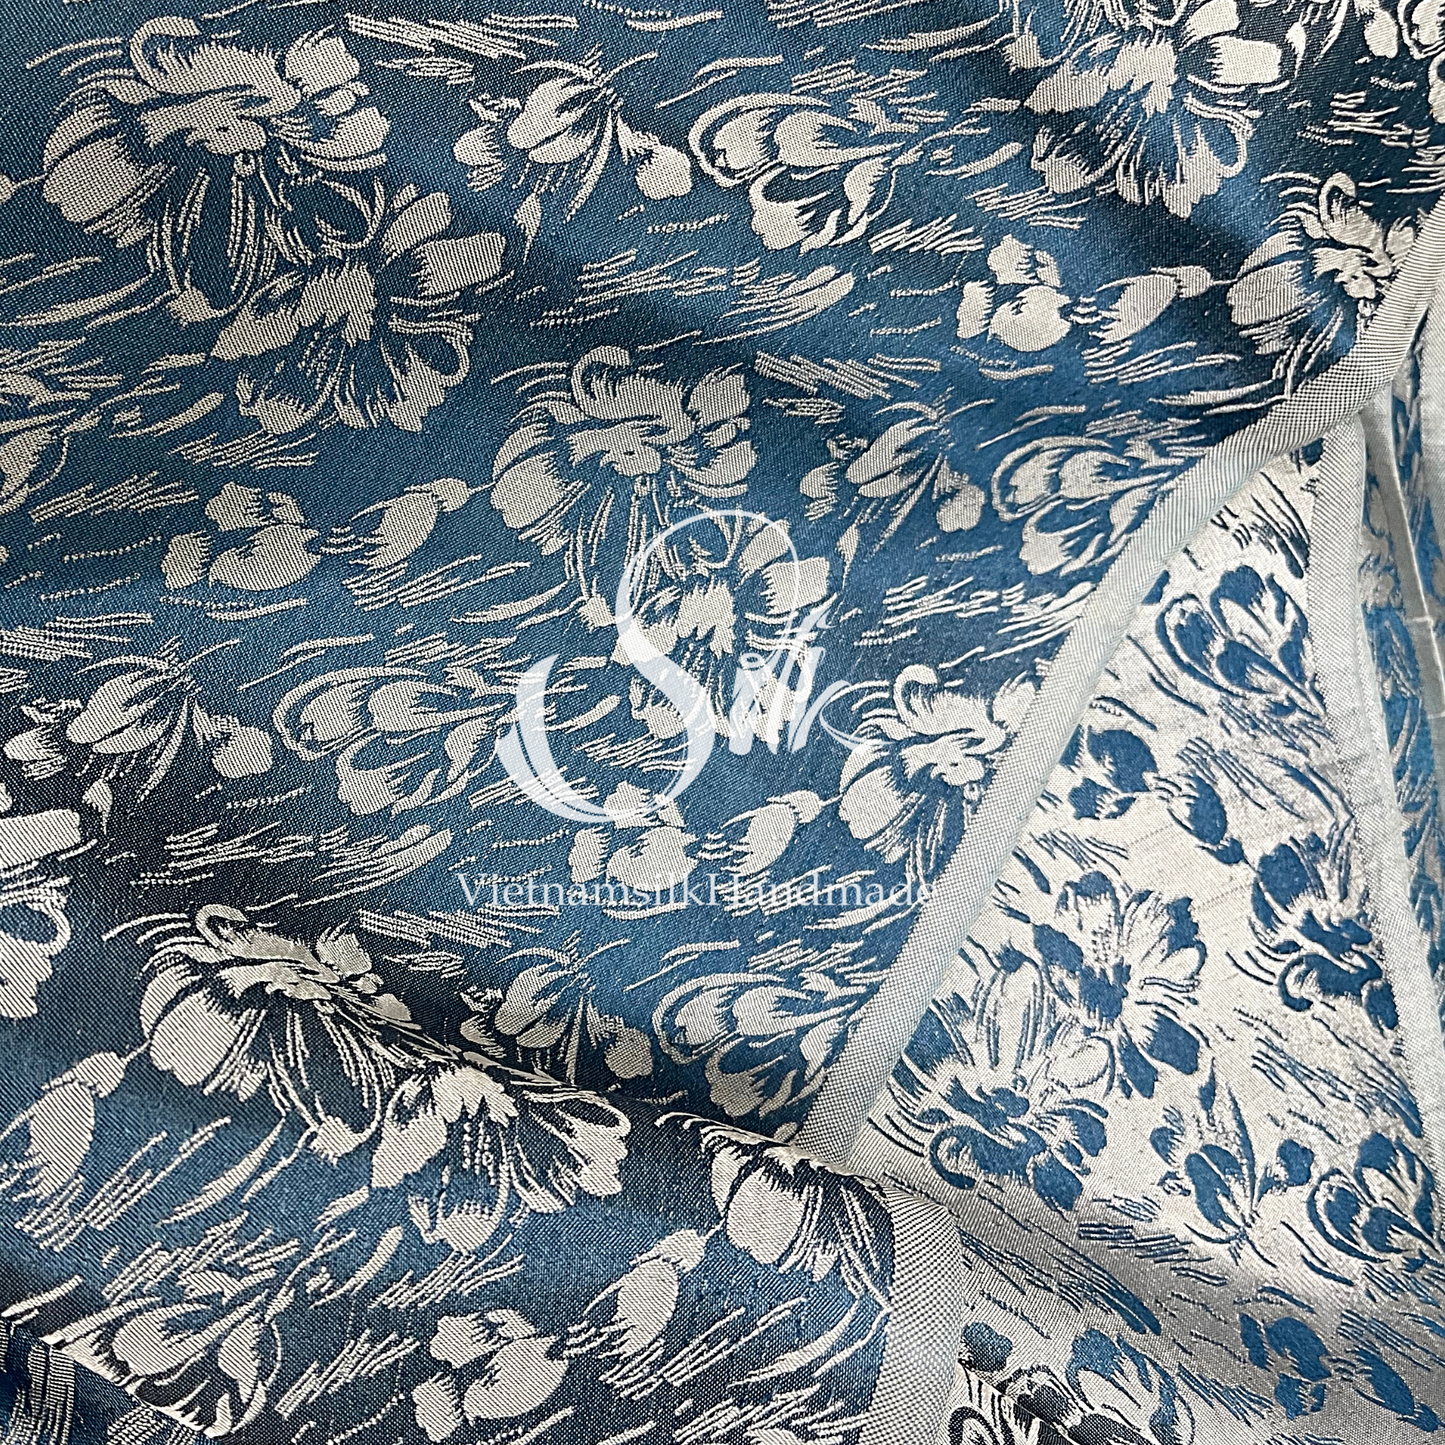 Navy Silk with Gray Flowers -Raining Design - PURE MULBERRY SILK fabric by the yard -  Floral Silk -Luxury Silk - Natural silk - Handmade in VietNam